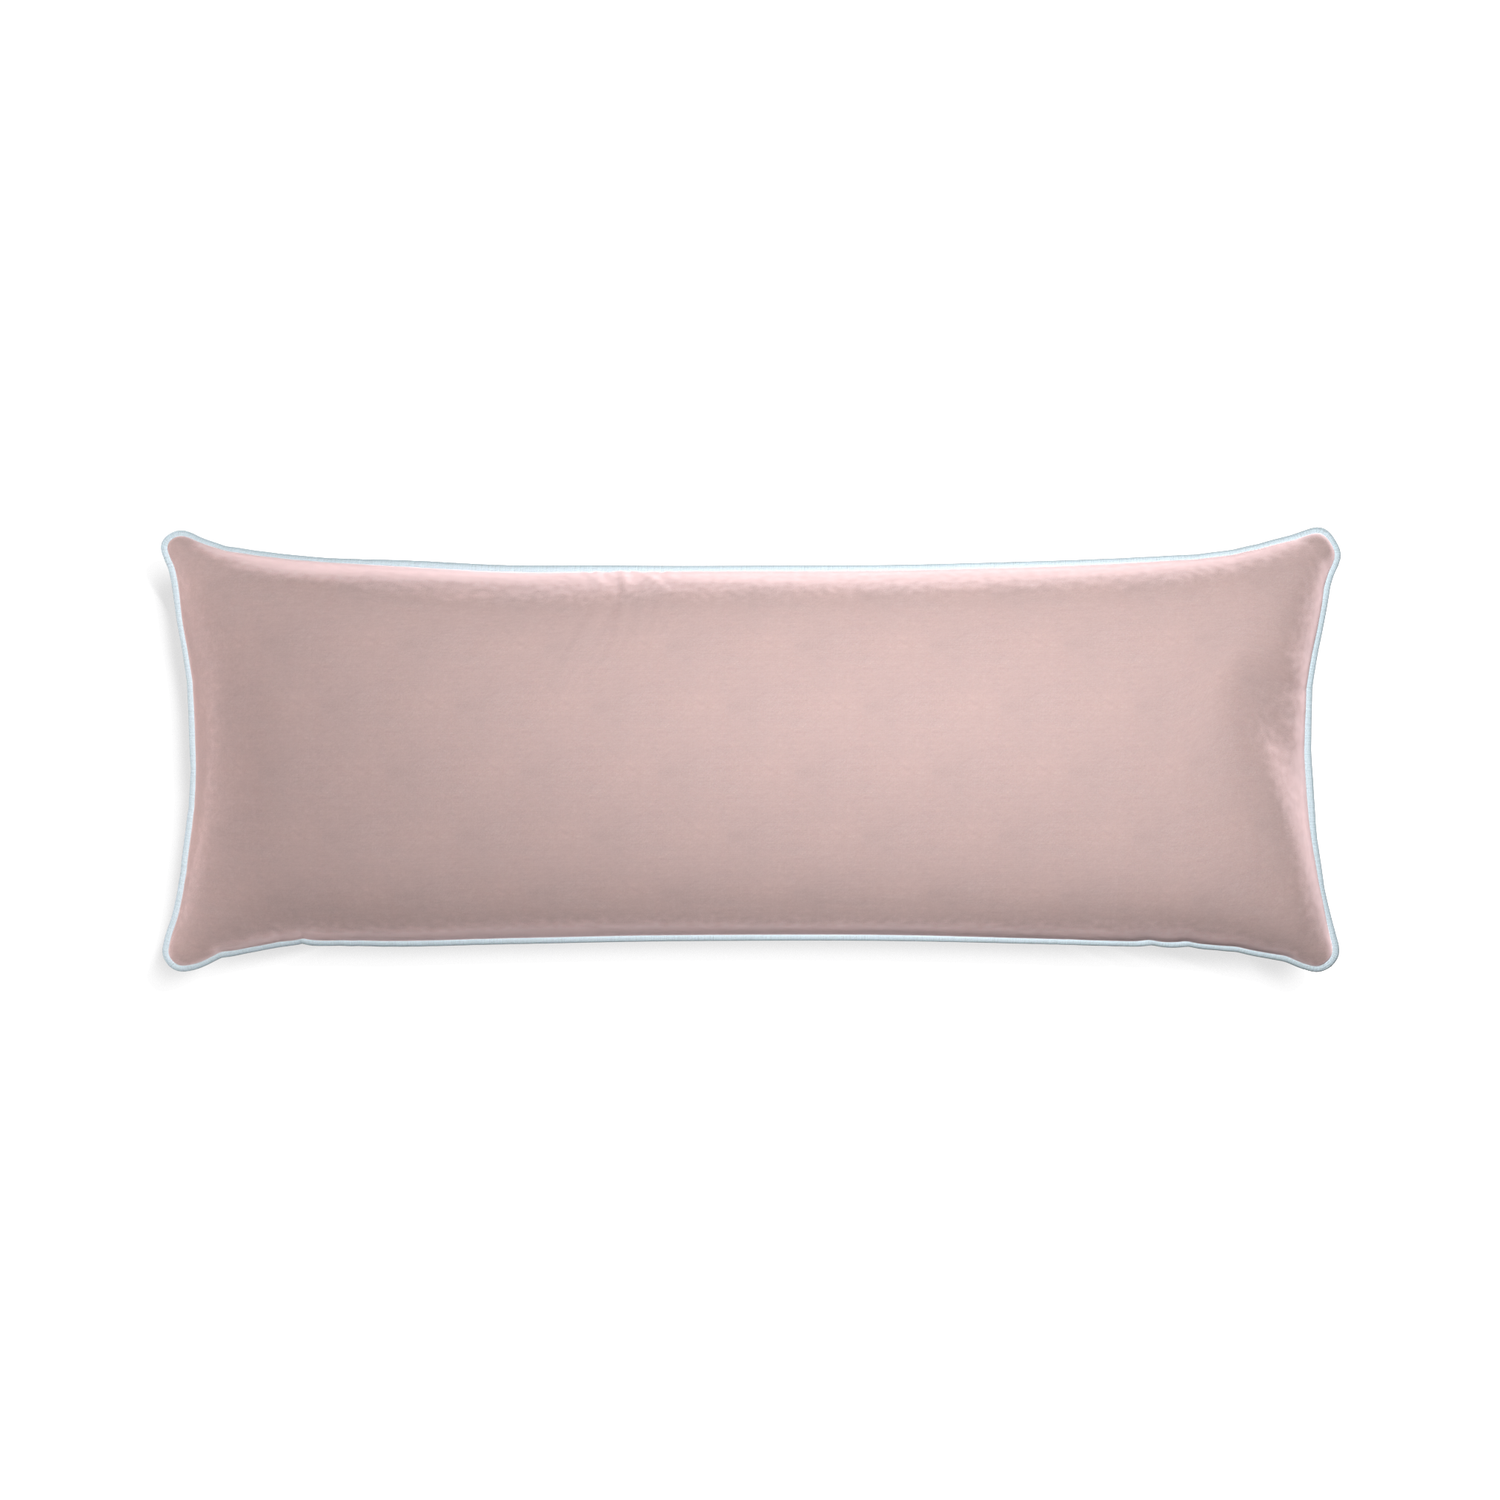 Xl-lumbar rose velvet custom pillow with powder piping on white background